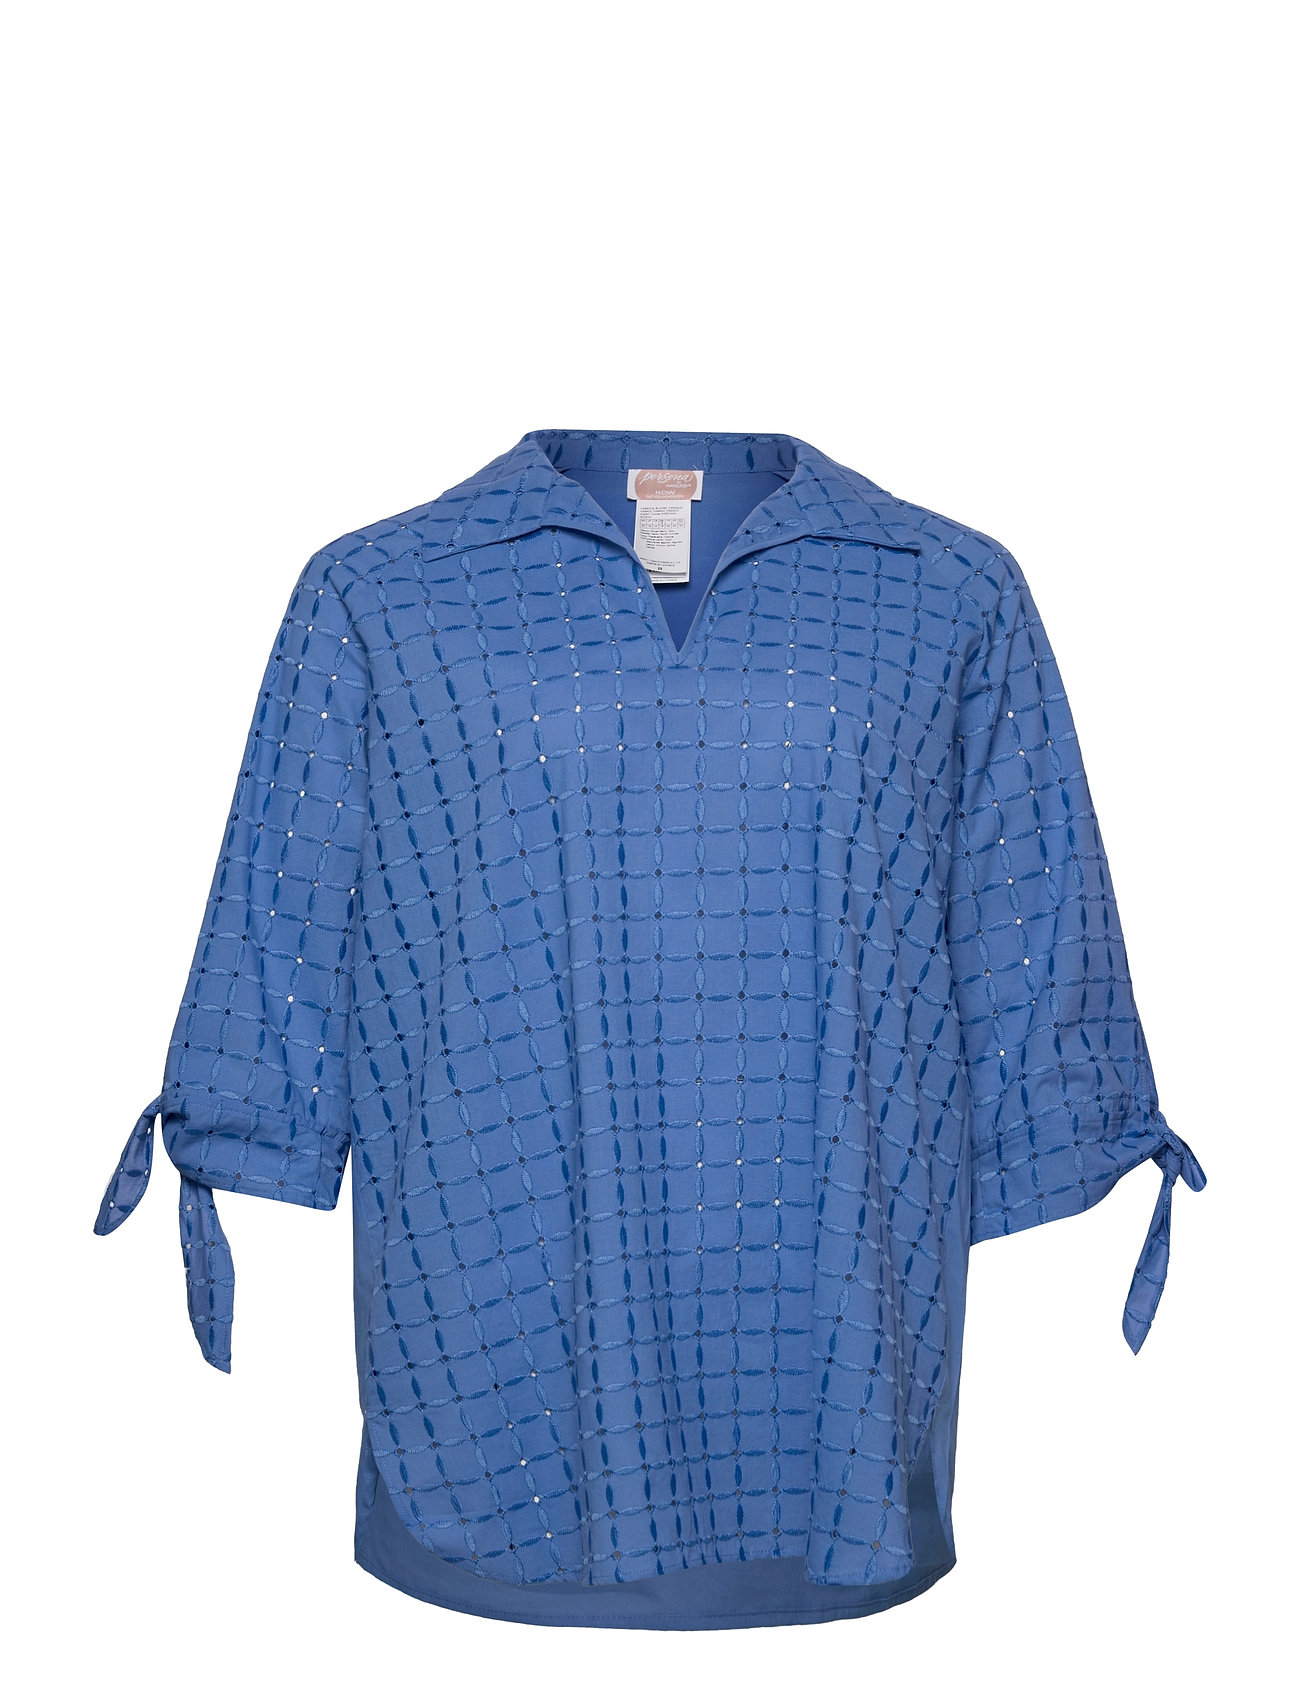 Fervore Tops Blouses Short-sleeved Blue Persona By Marina Rinaldi